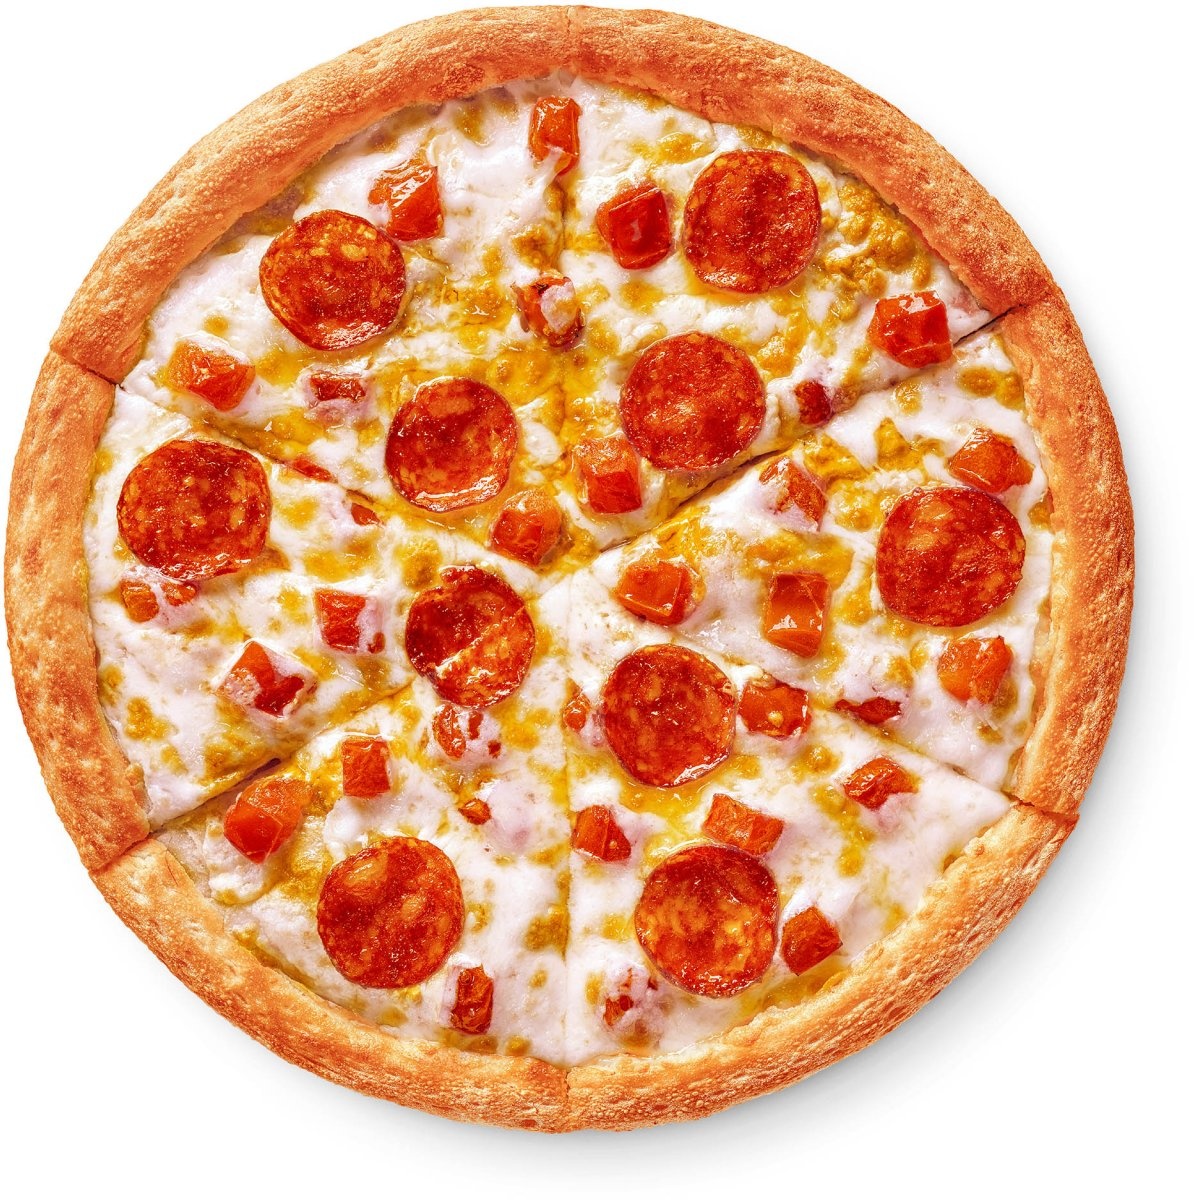 сколько стоит средняя пепперони в додо пицца фото 102